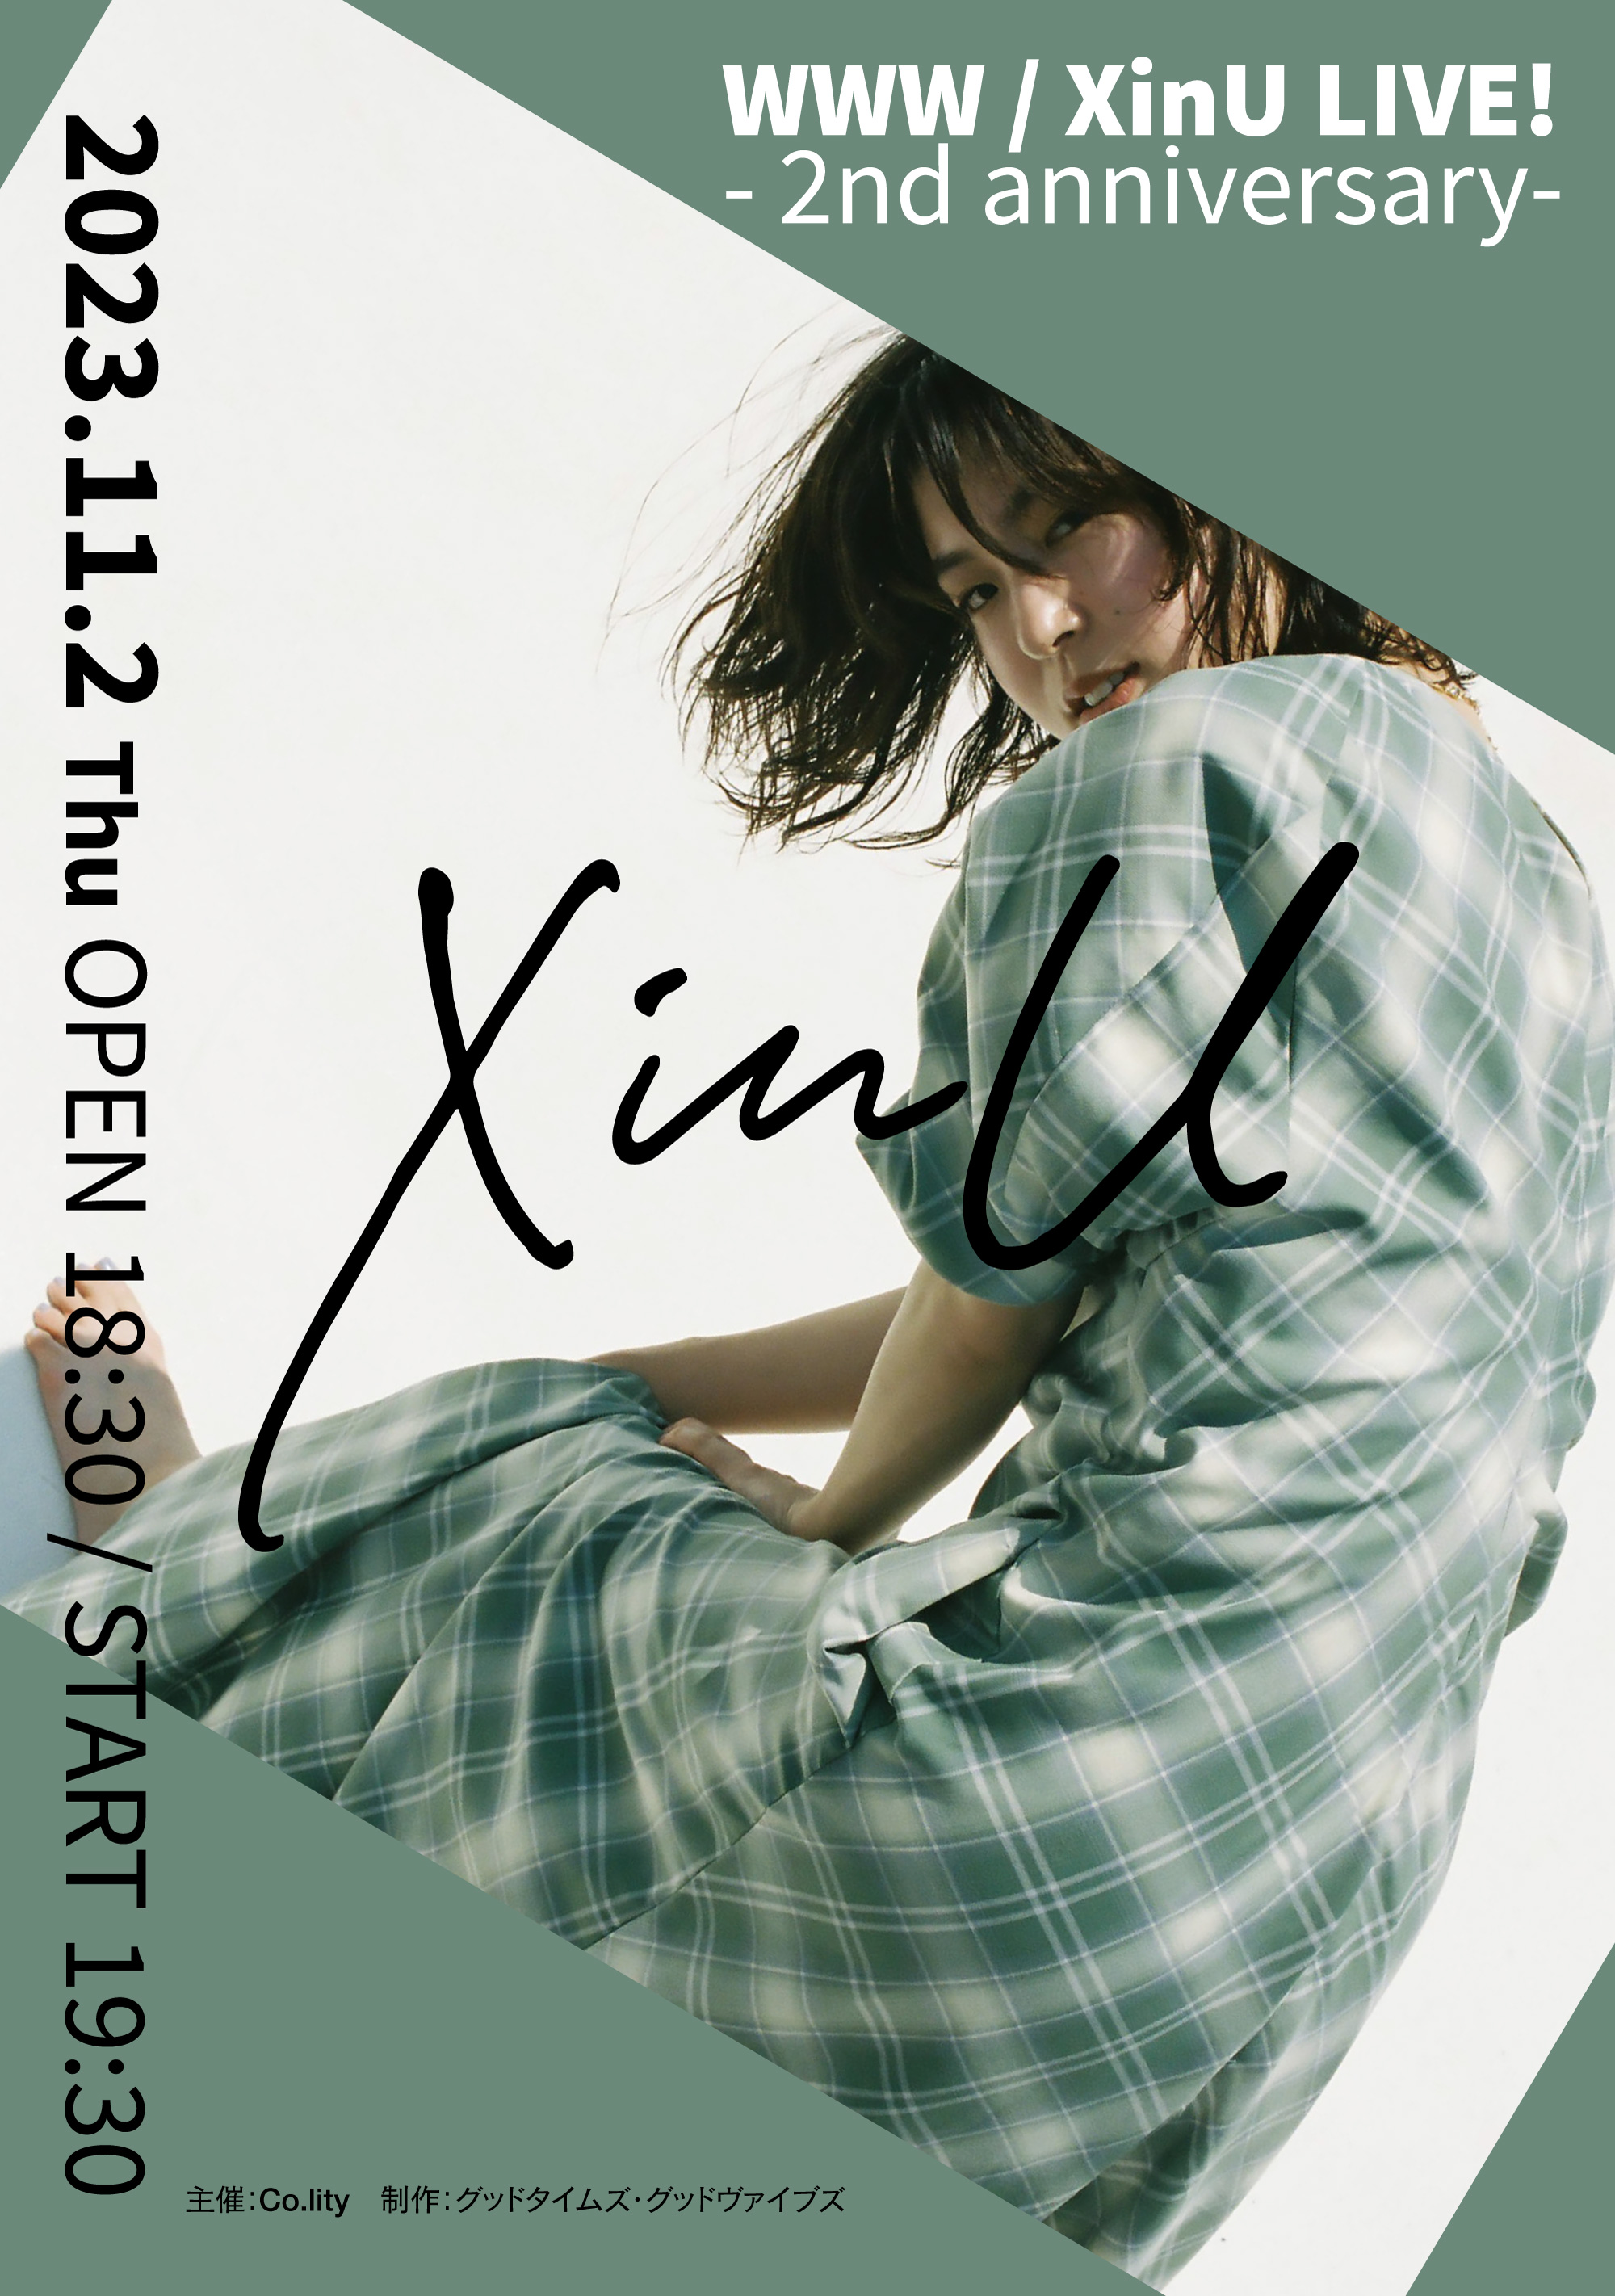 WWW / XinU LIVE! - 2nd anniversary